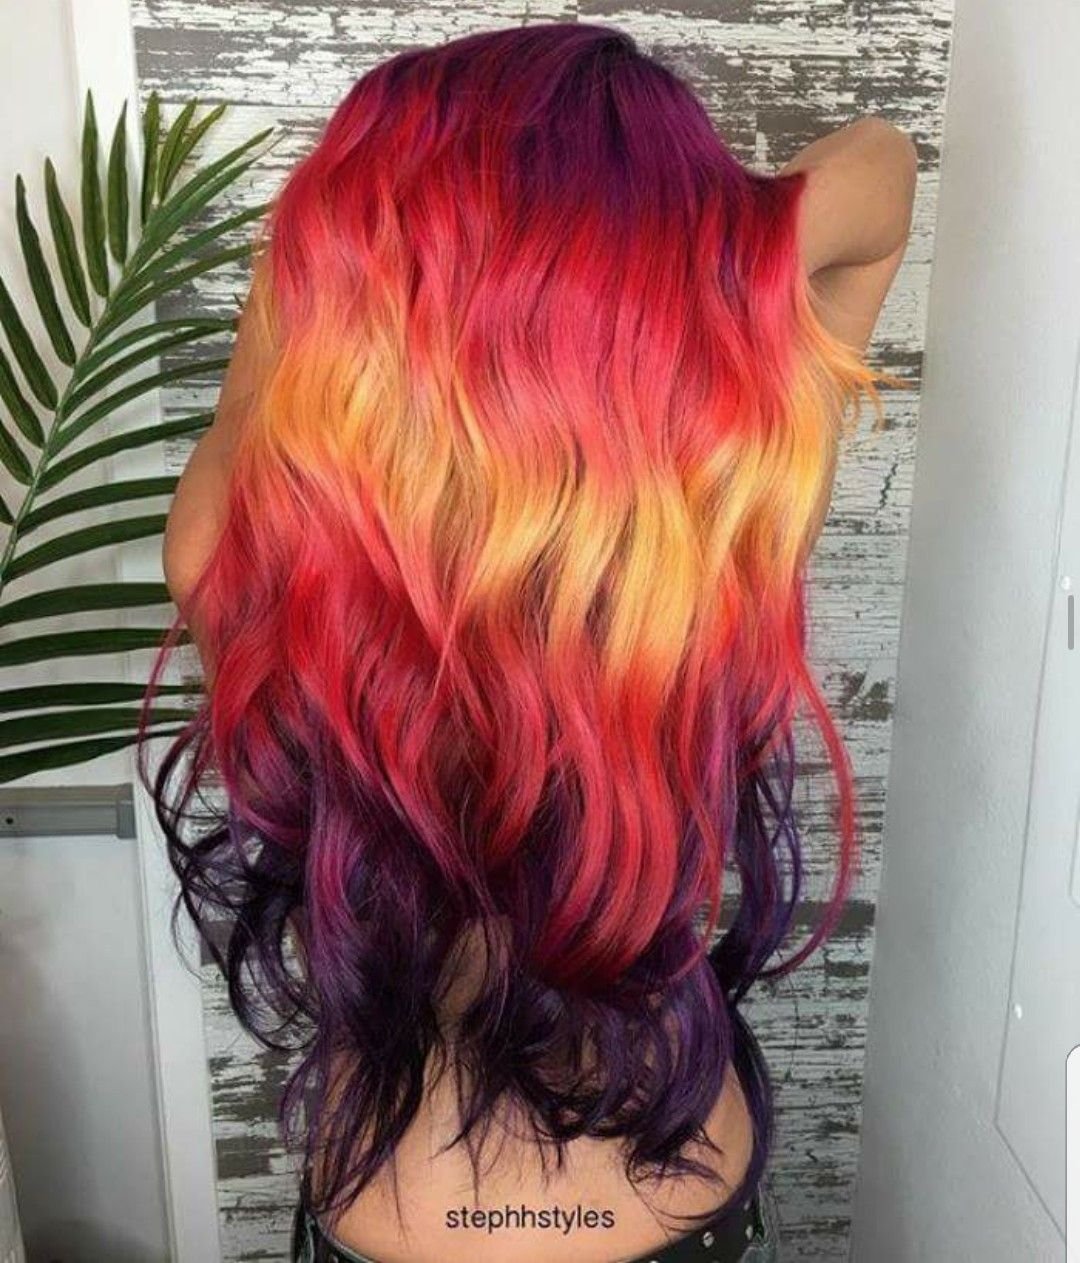 Окрашивание волос цвета фото в яркие